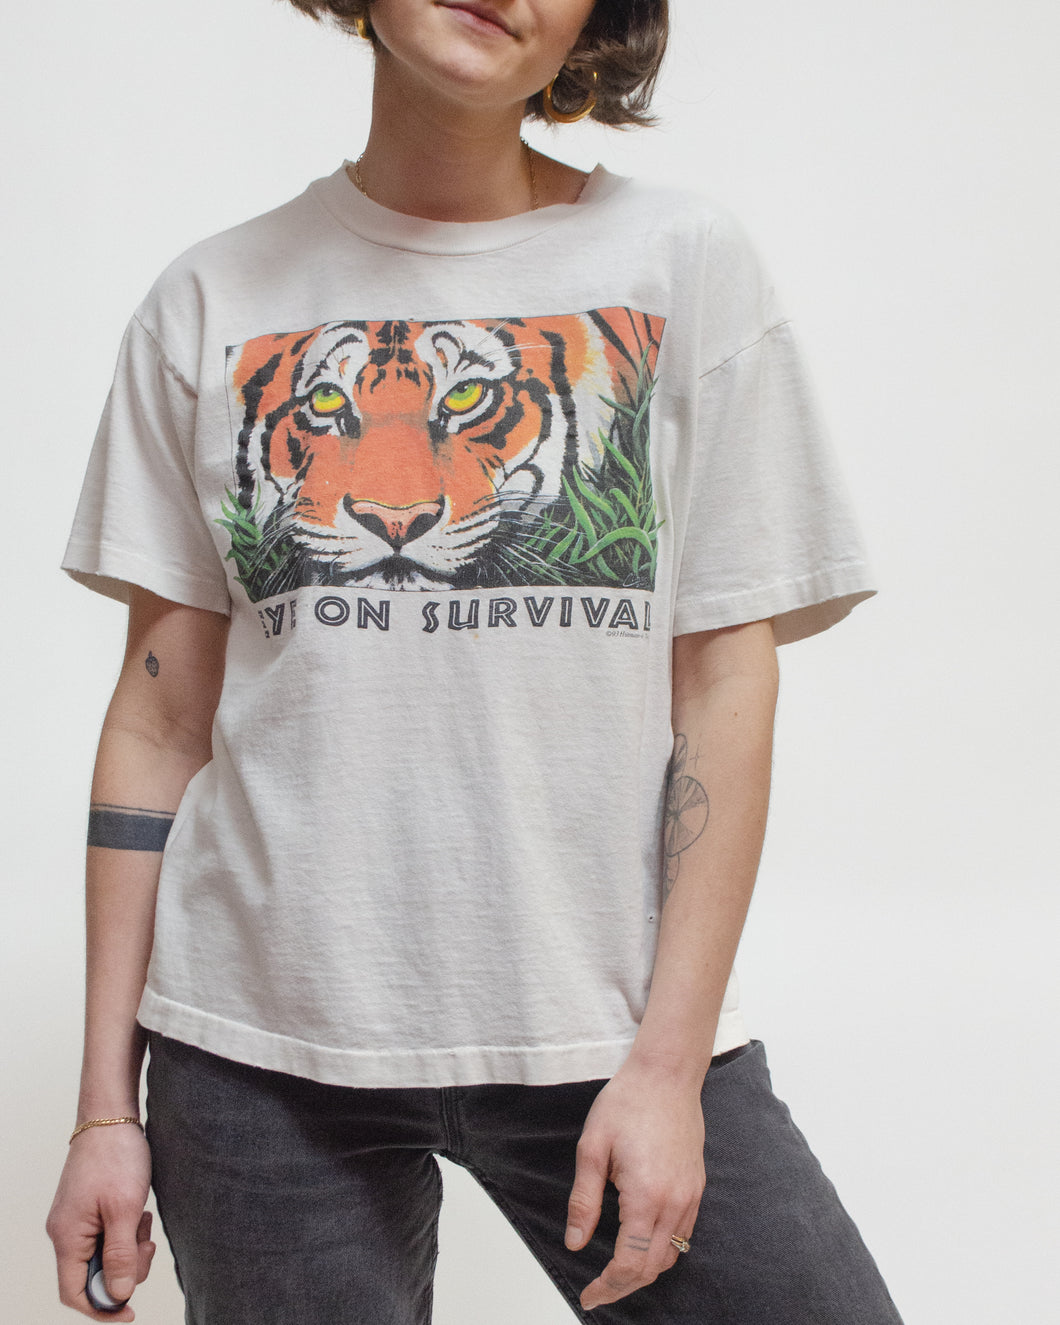 Eye on survival ‘93 t-shirt